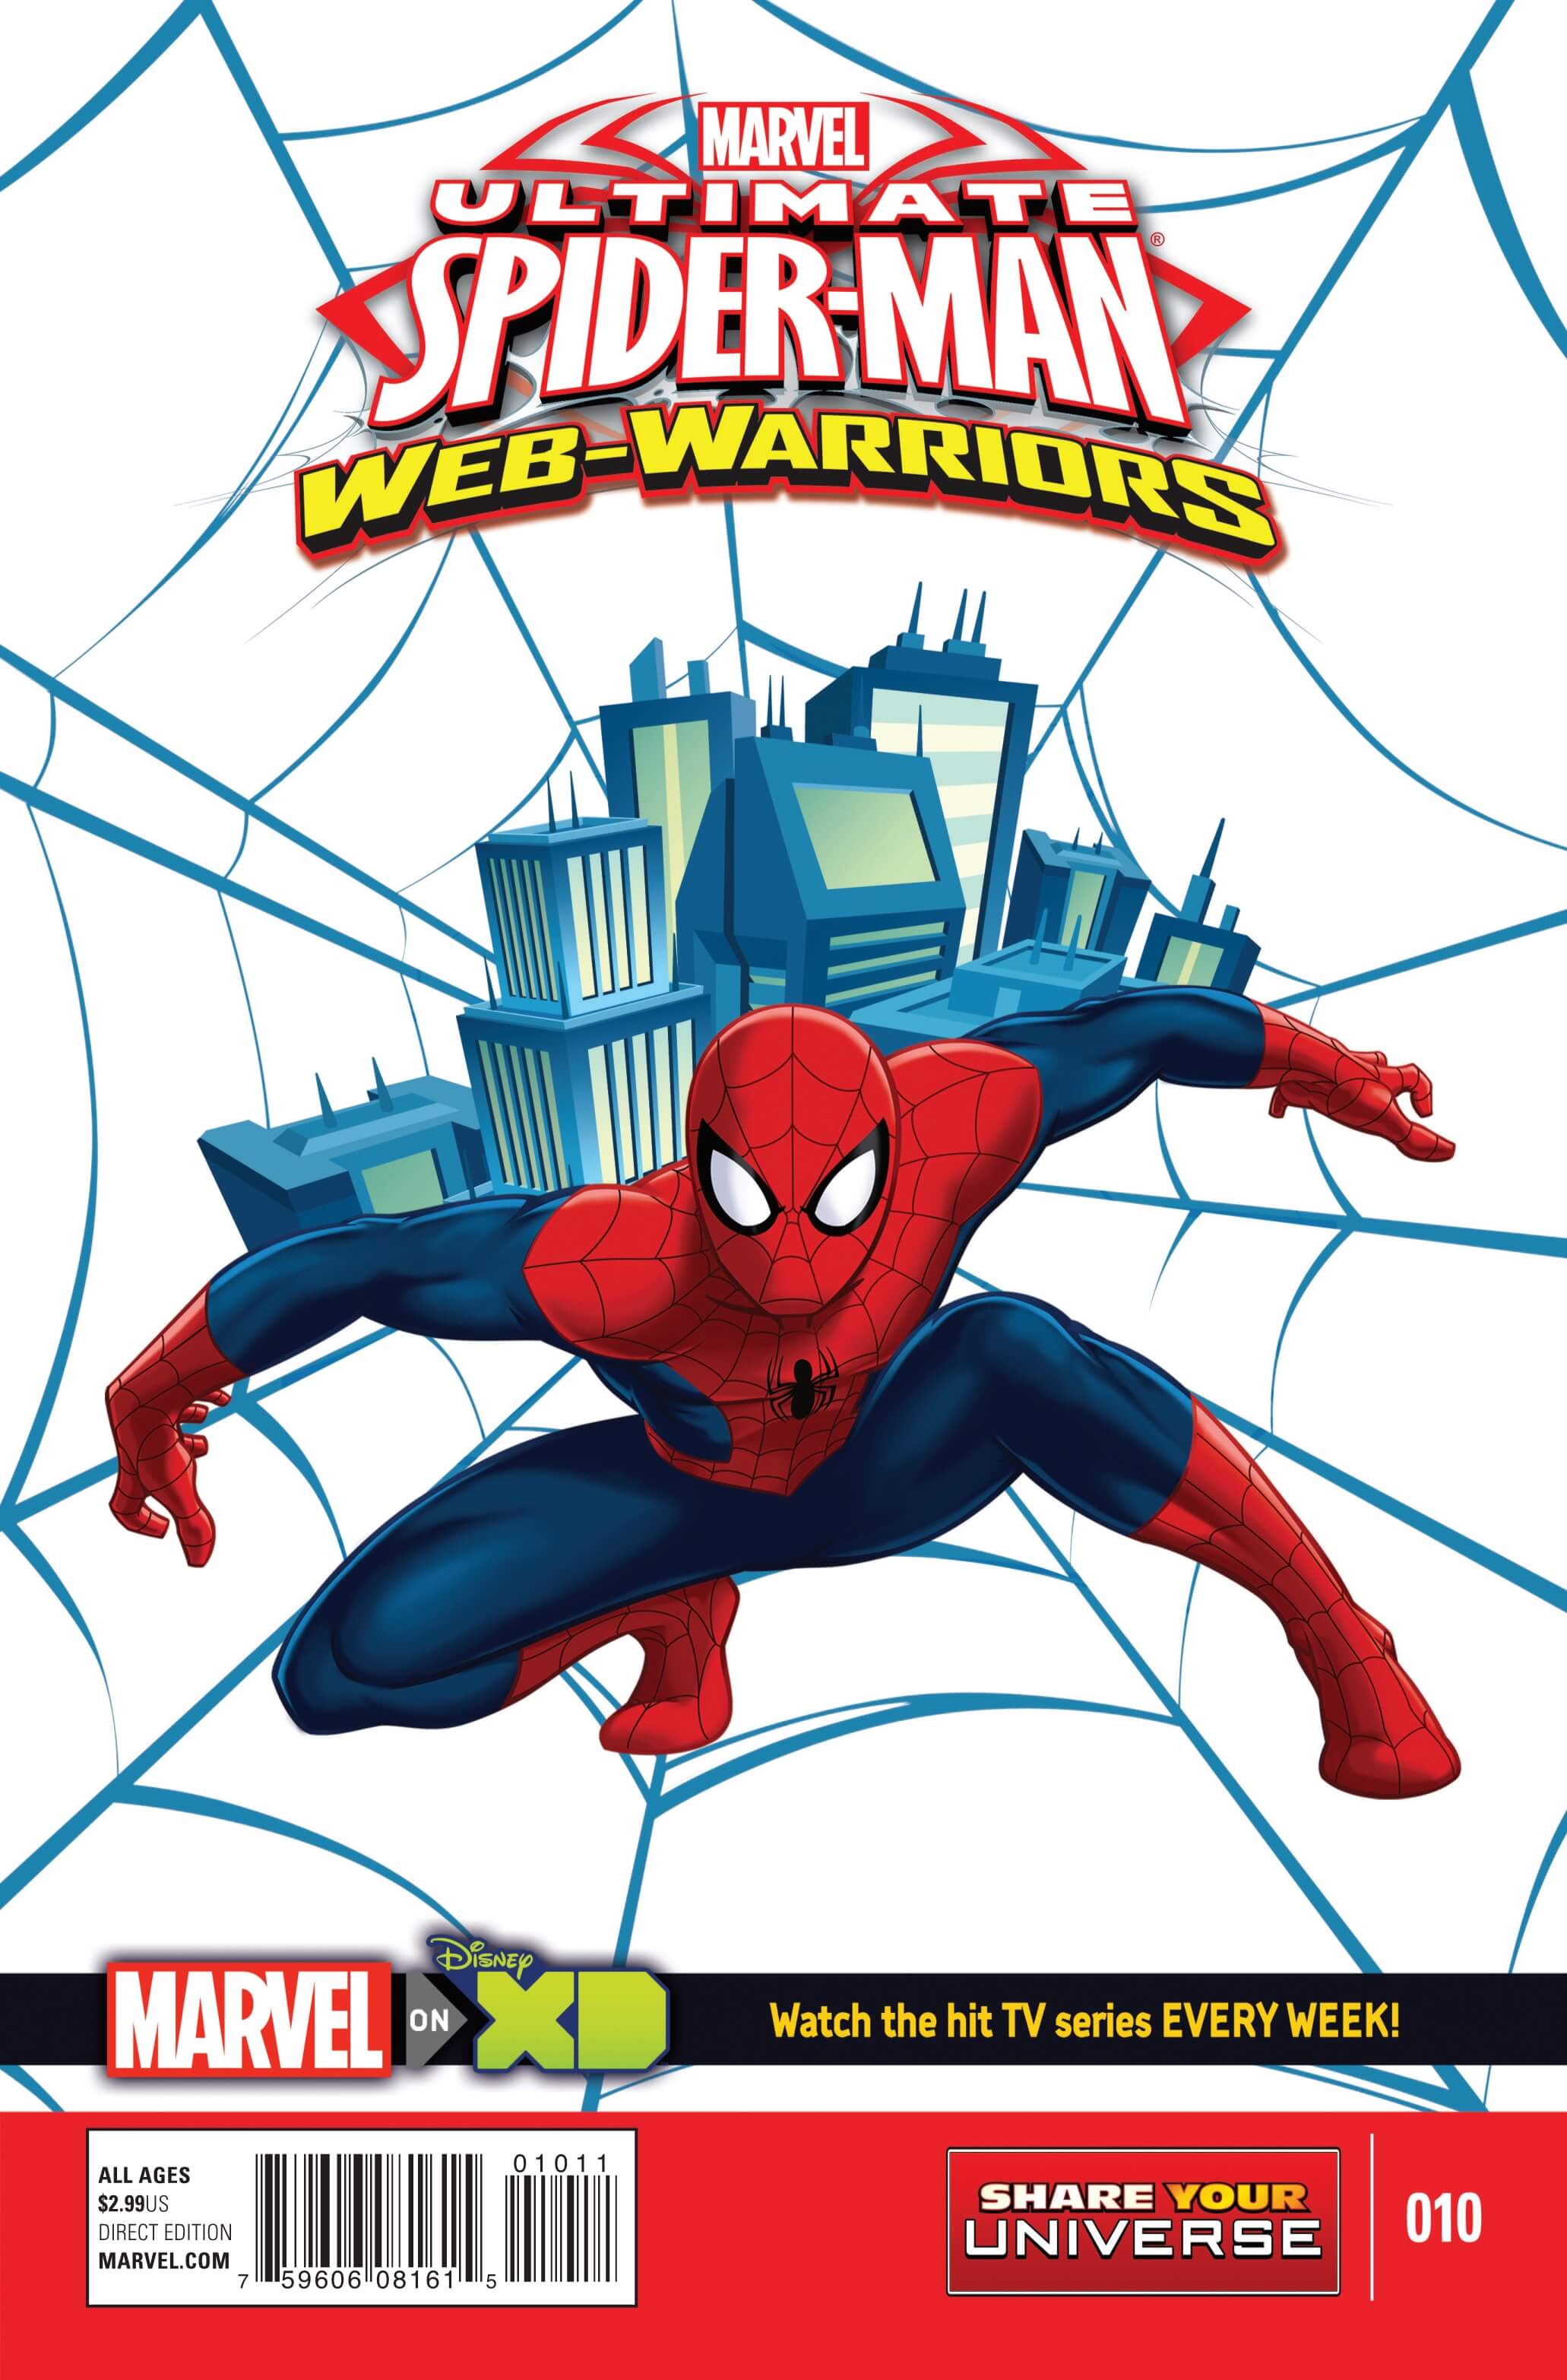 Spiderman Web-Warrior Superhero Toy Fights Iron Patriot